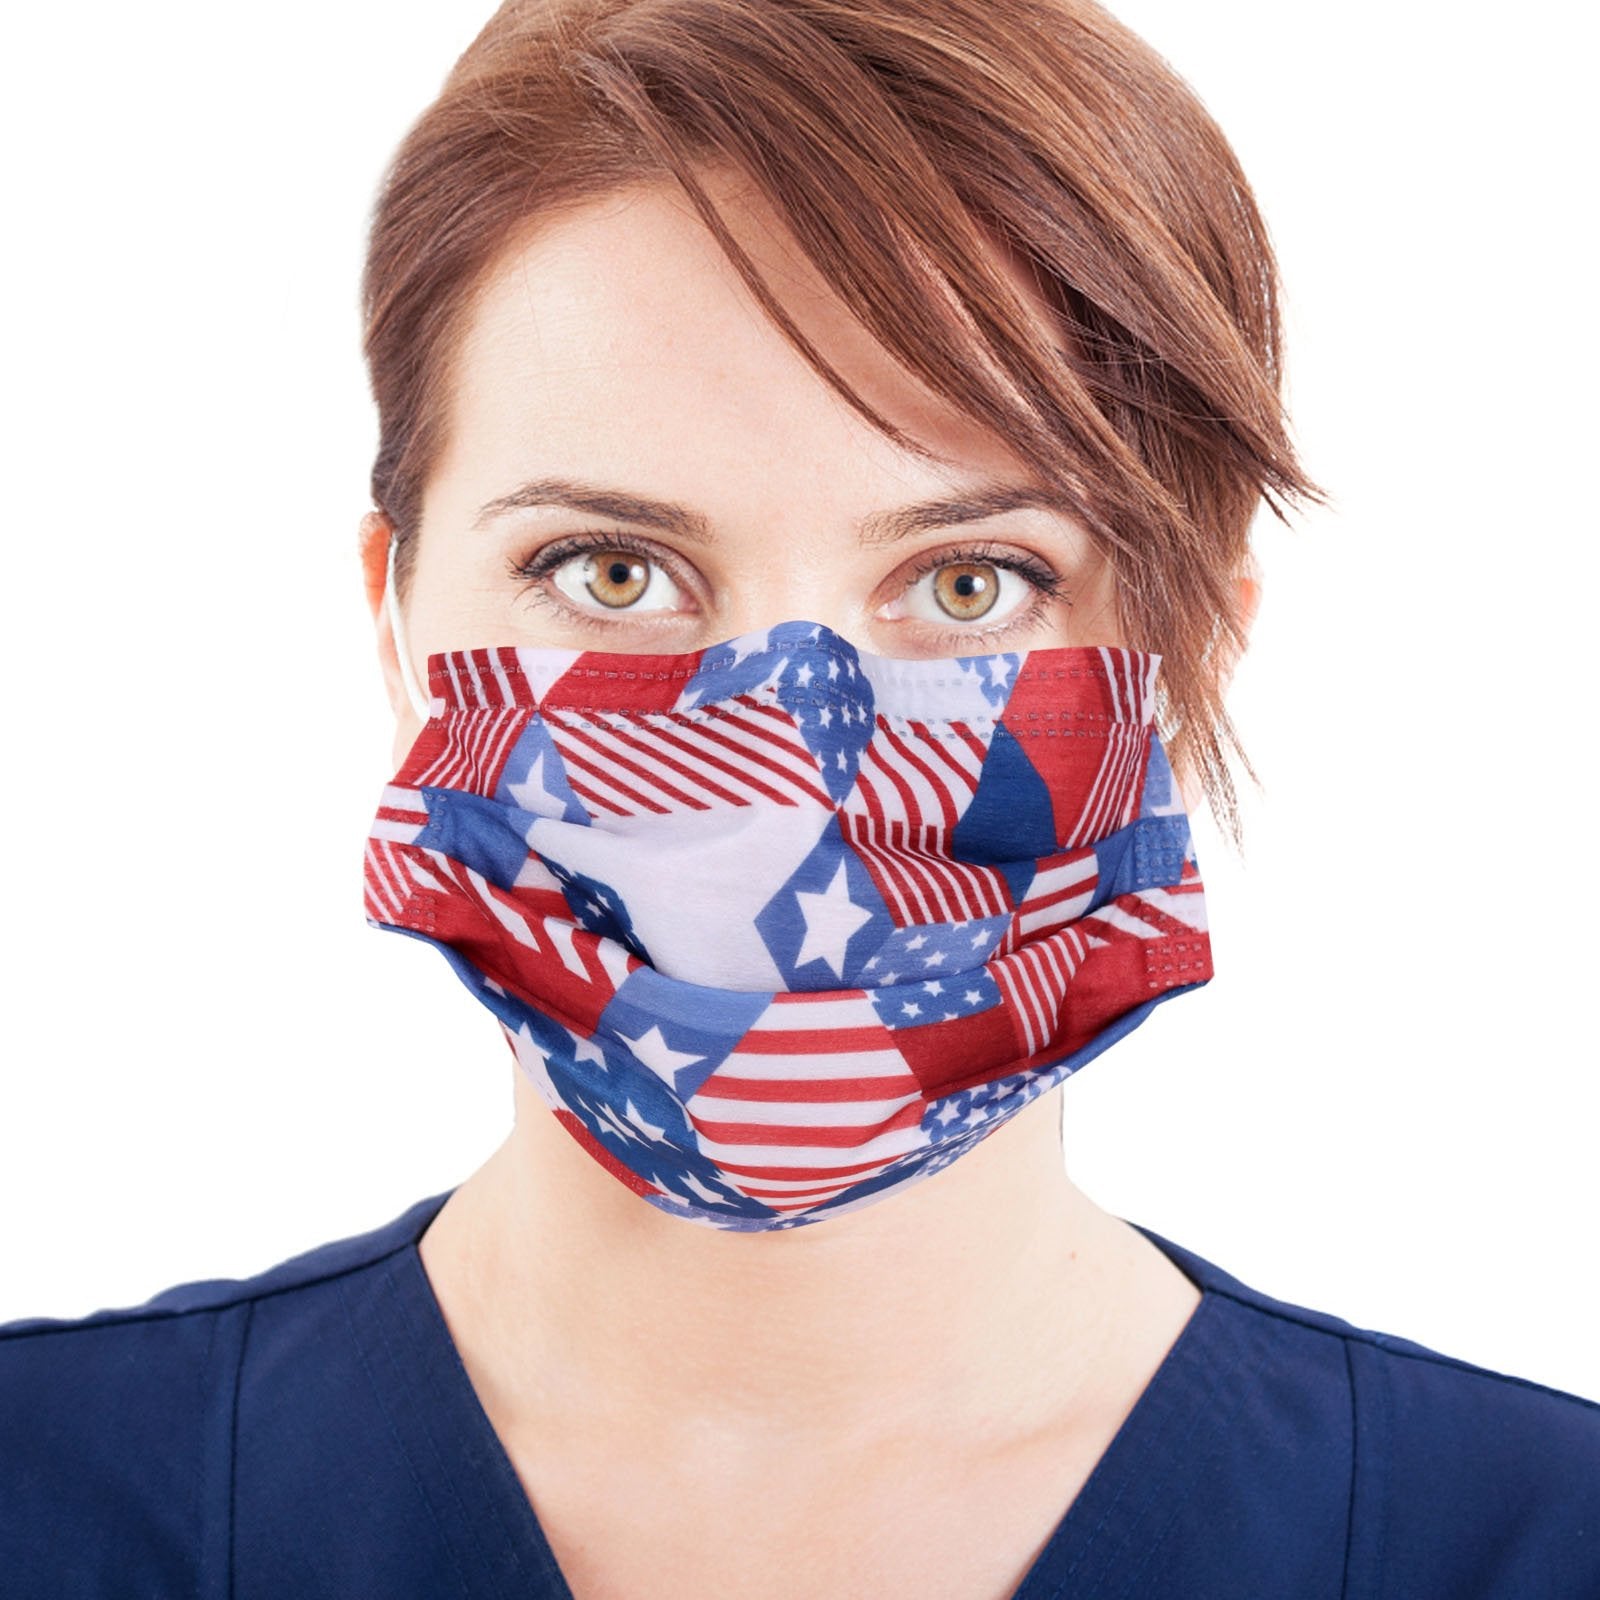 2000Pcs  American Bling 20PCS/Box  American Flag Colors Print Disposable Face Masks 3 Layers Face Masks